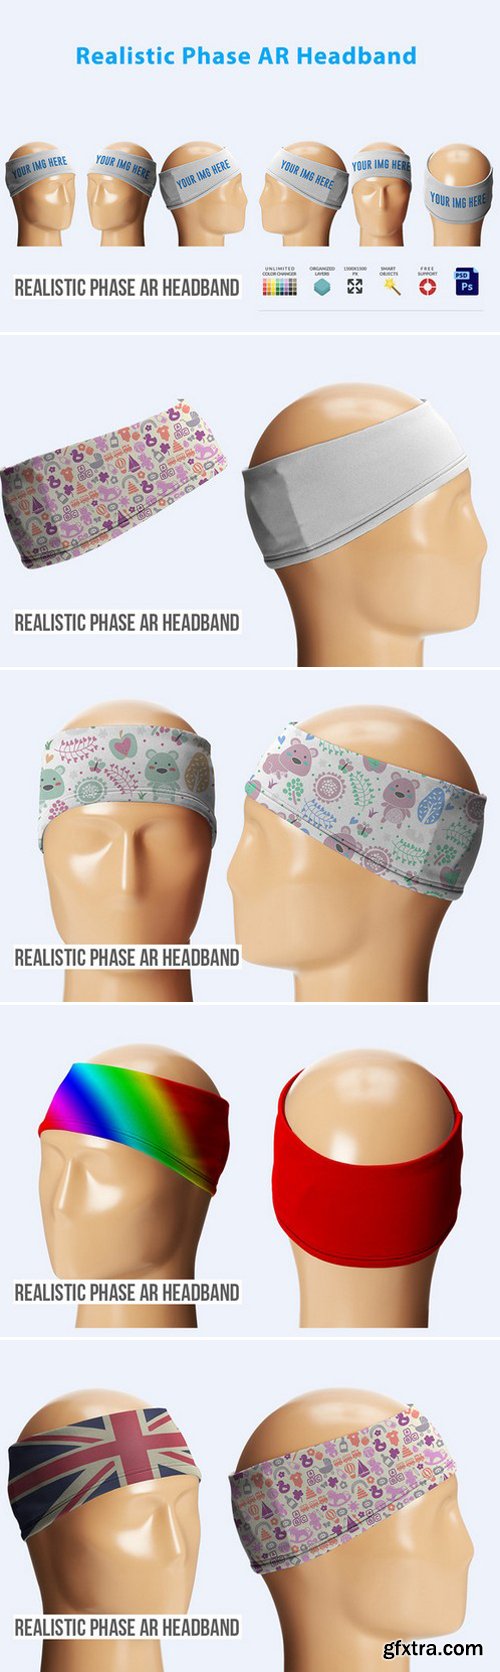 CM - Realistic Phase AR Headband 451476